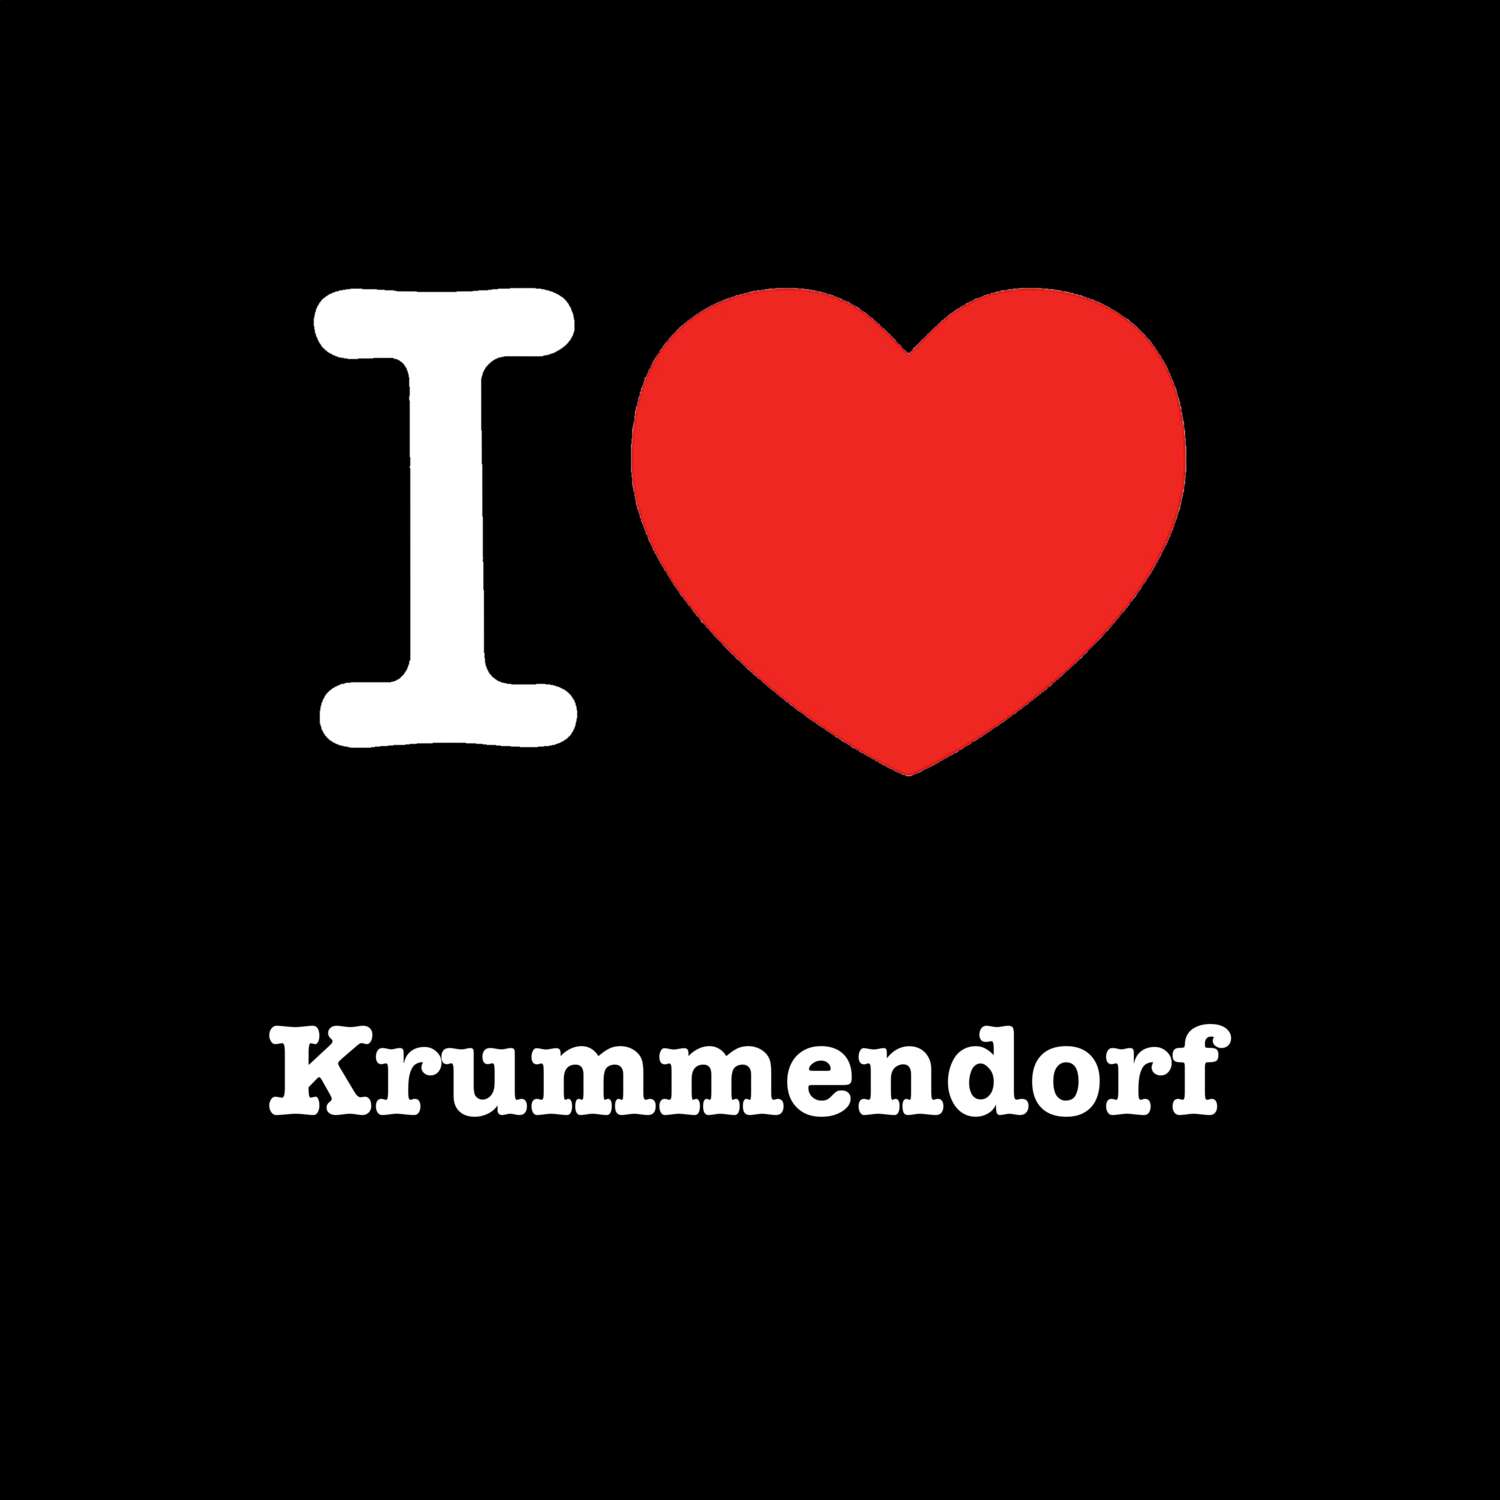 Krummendorf T-Shirt »I love«